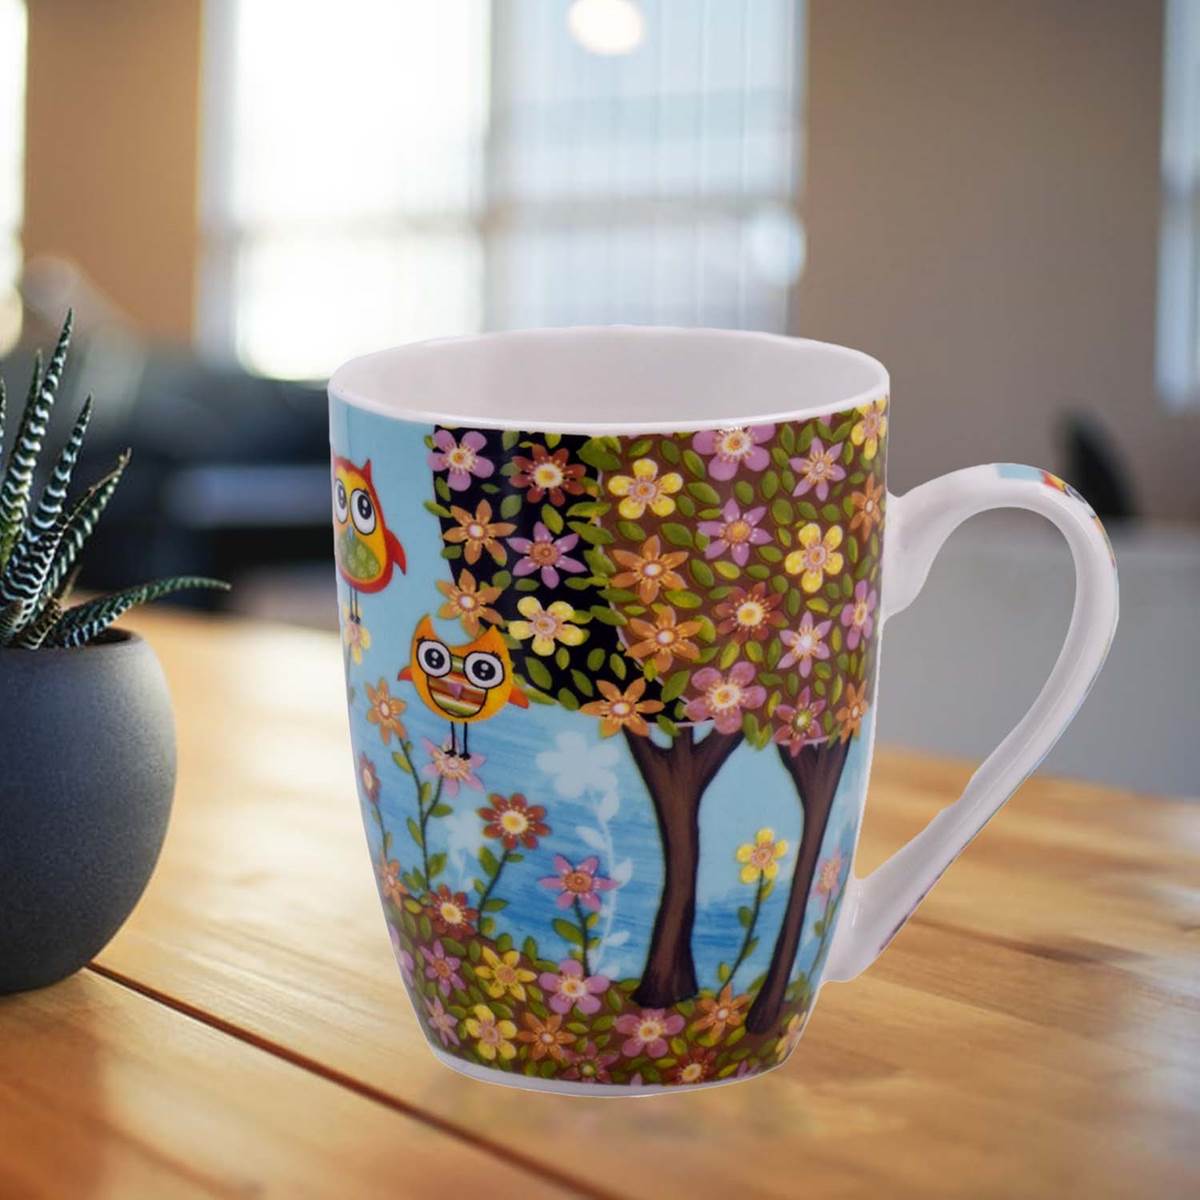 Printed Ceramic Coffee or Tea Mug with handle - 325ml (3268G-B)